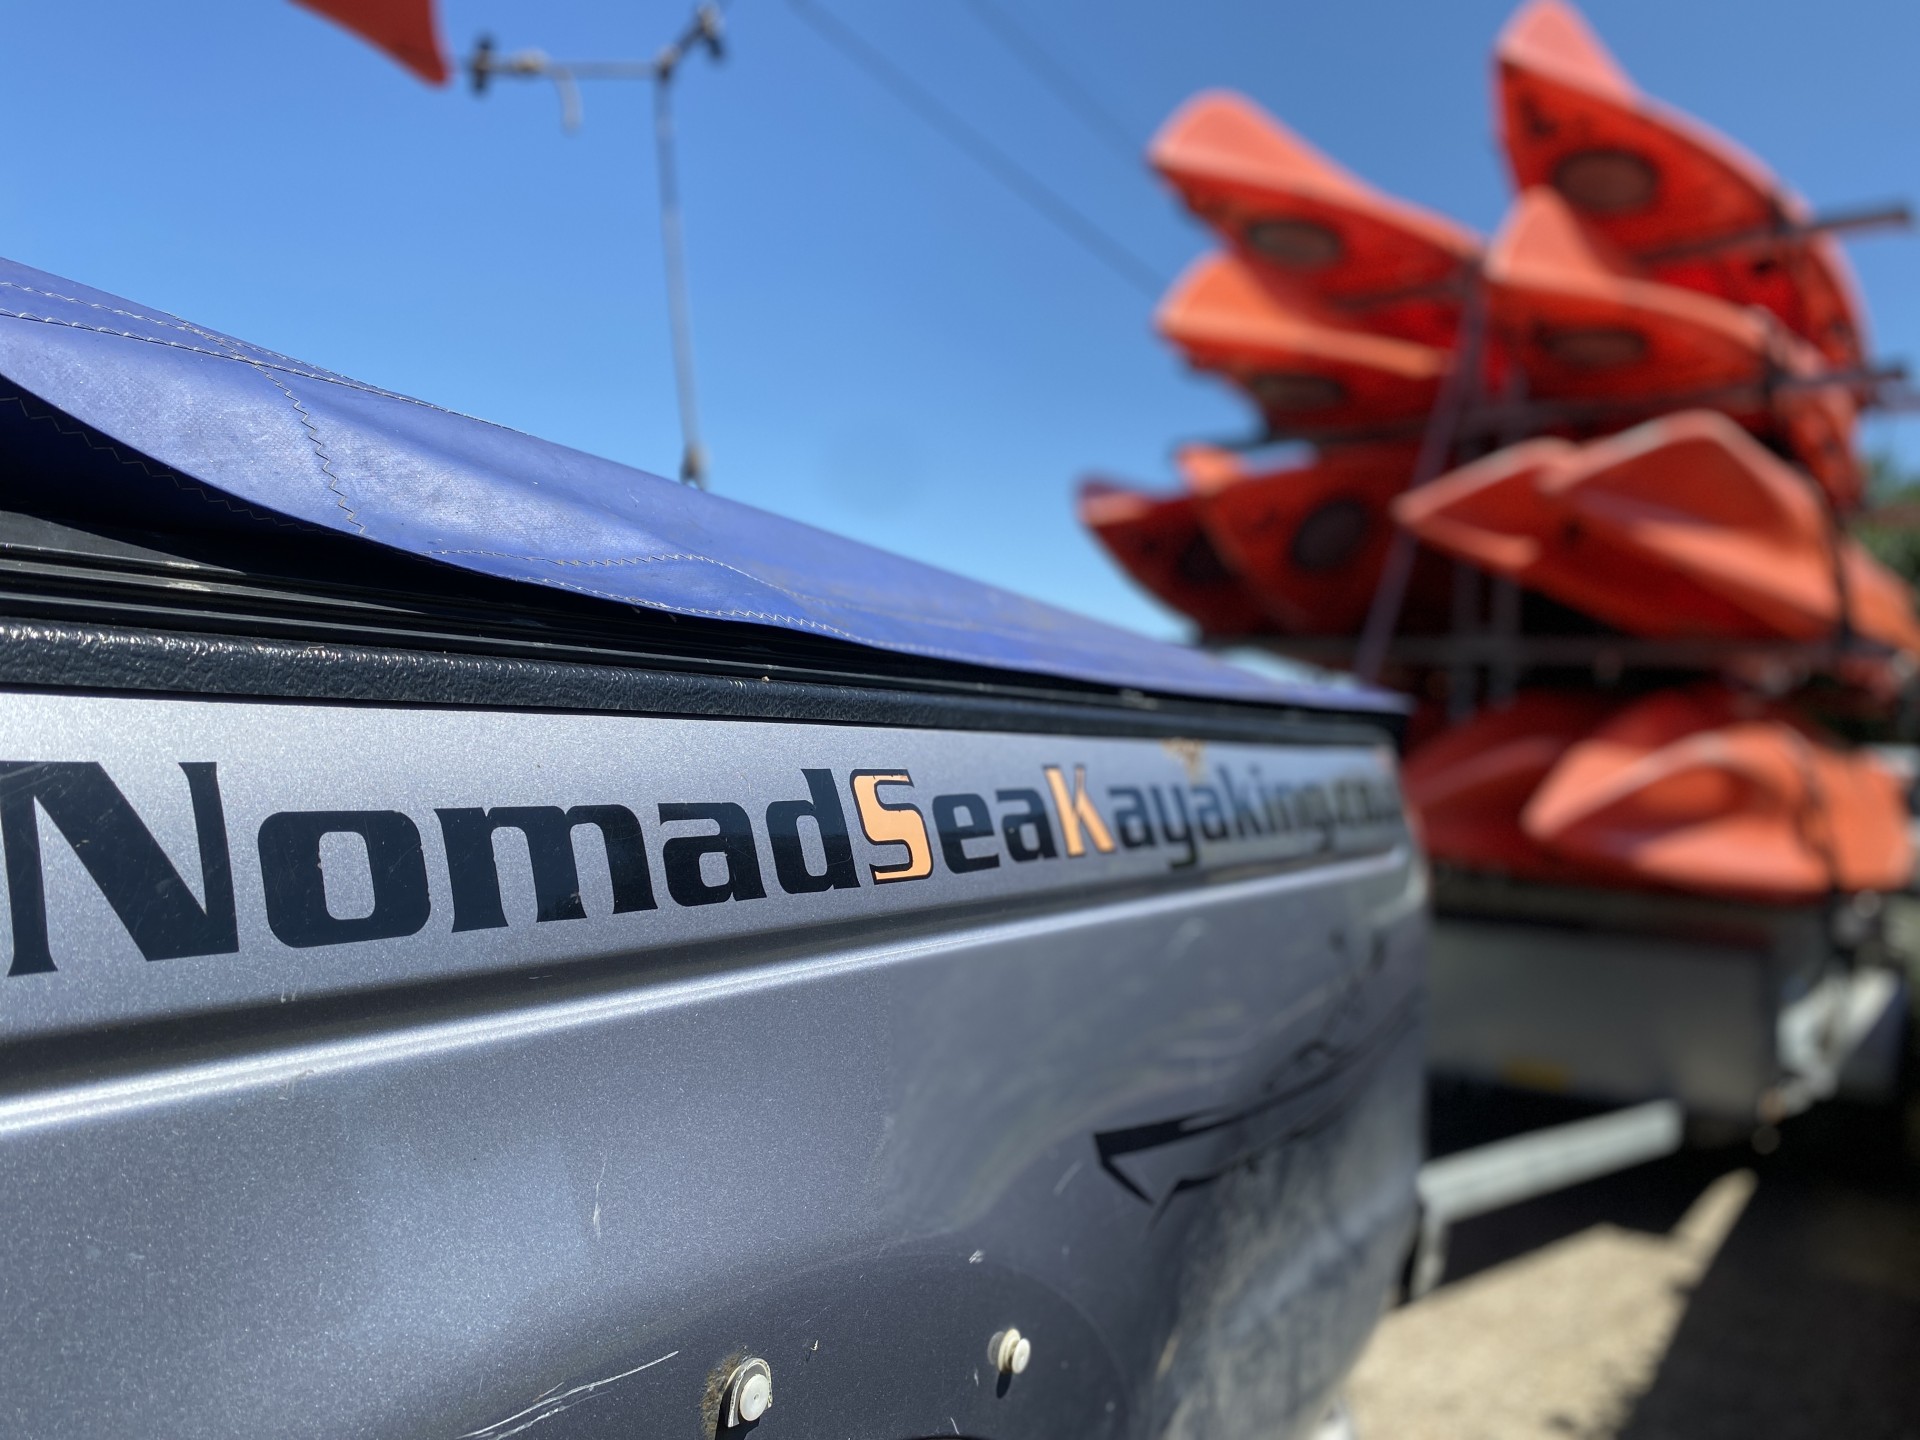 Trailer loaded with orange kayaks with NOMAD Sea Kayaking.